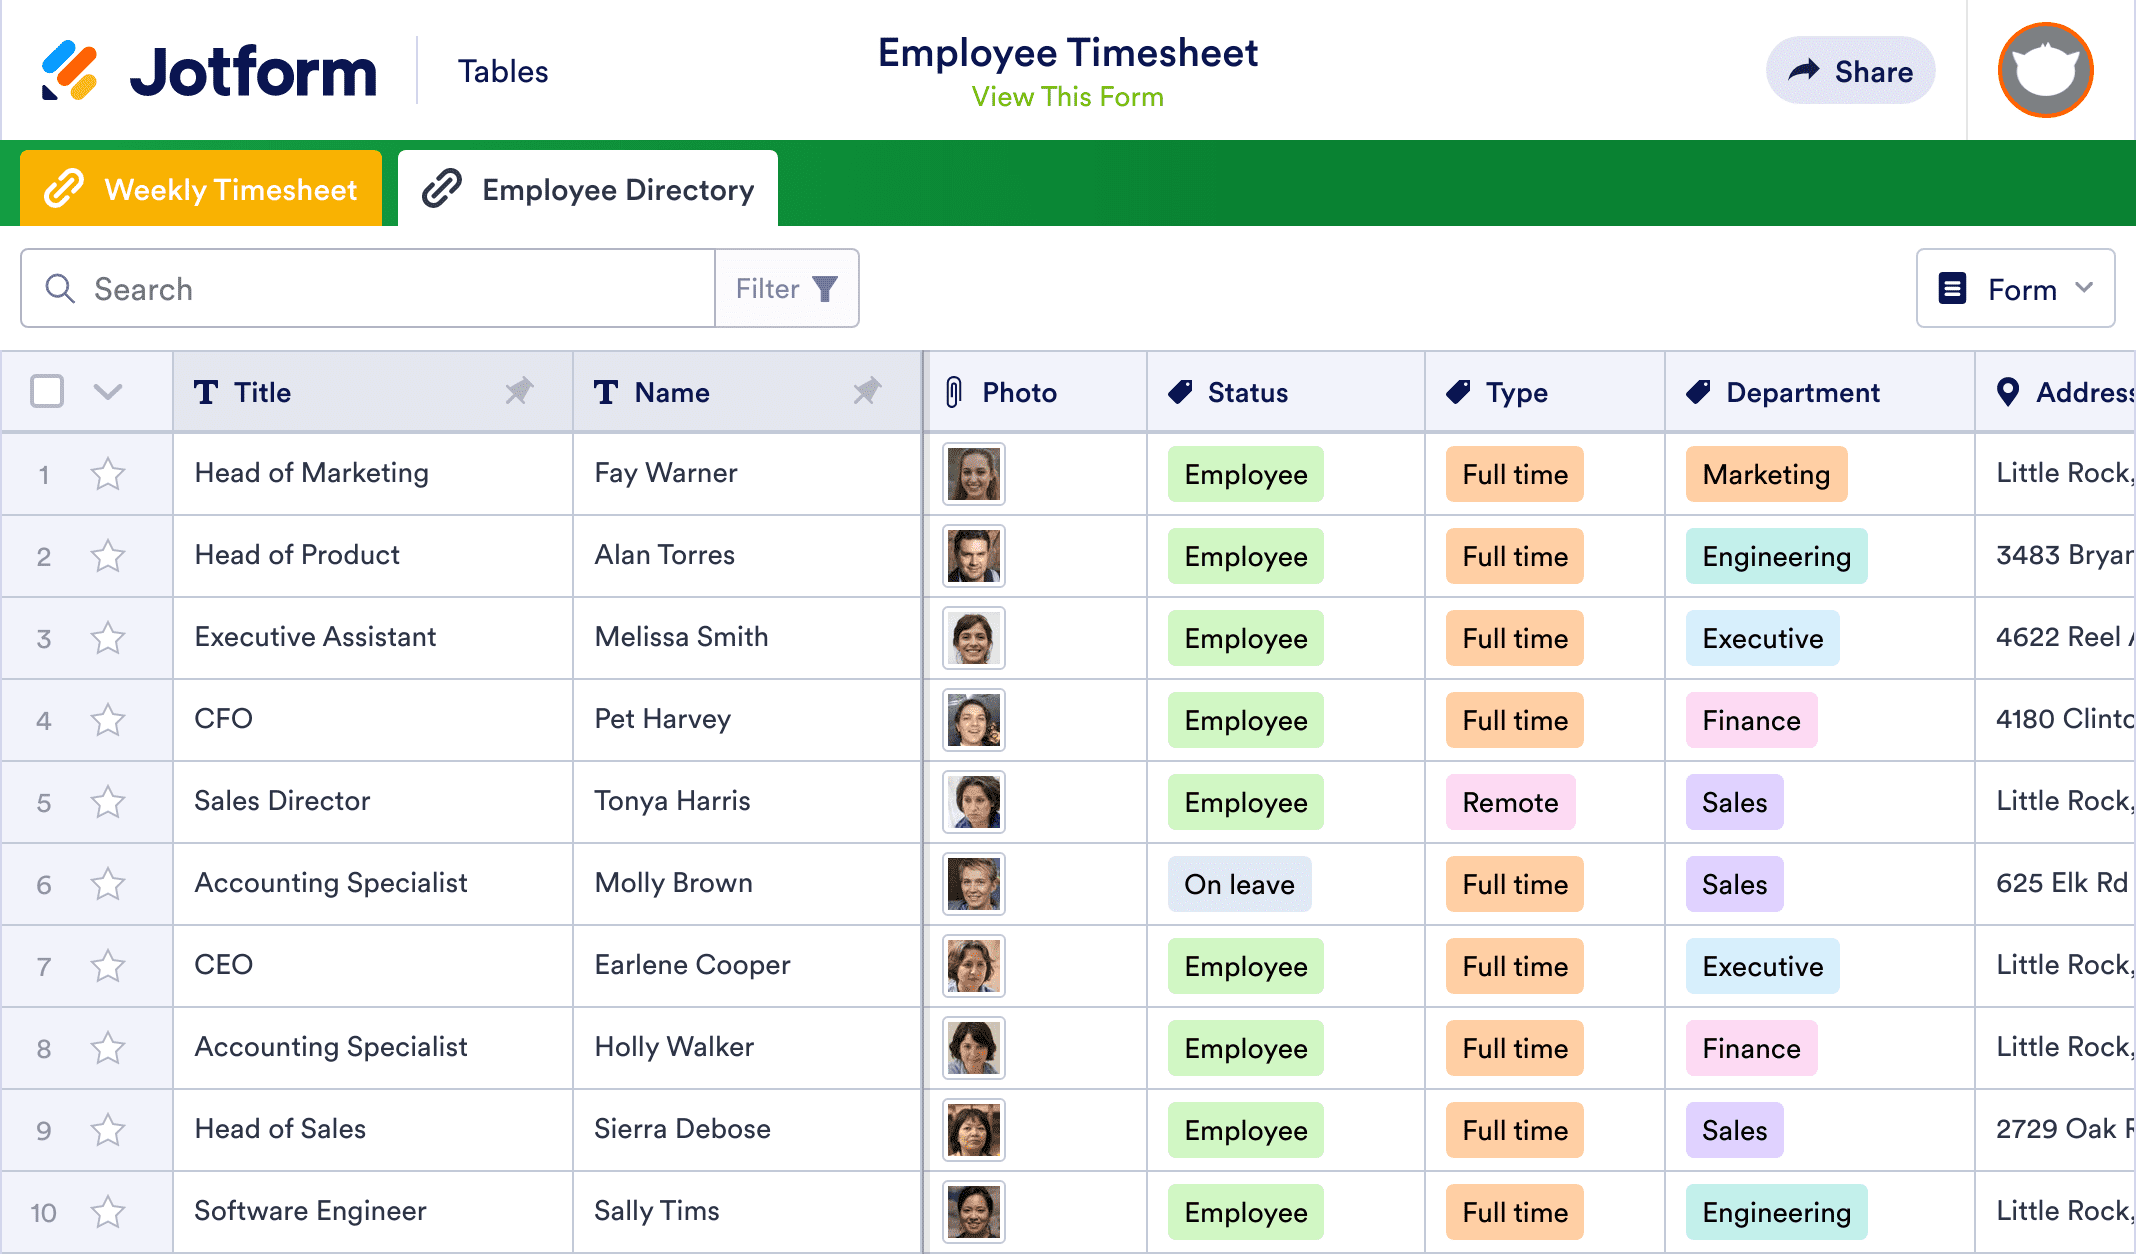 Employee Timesheet Template | Jotform Tables